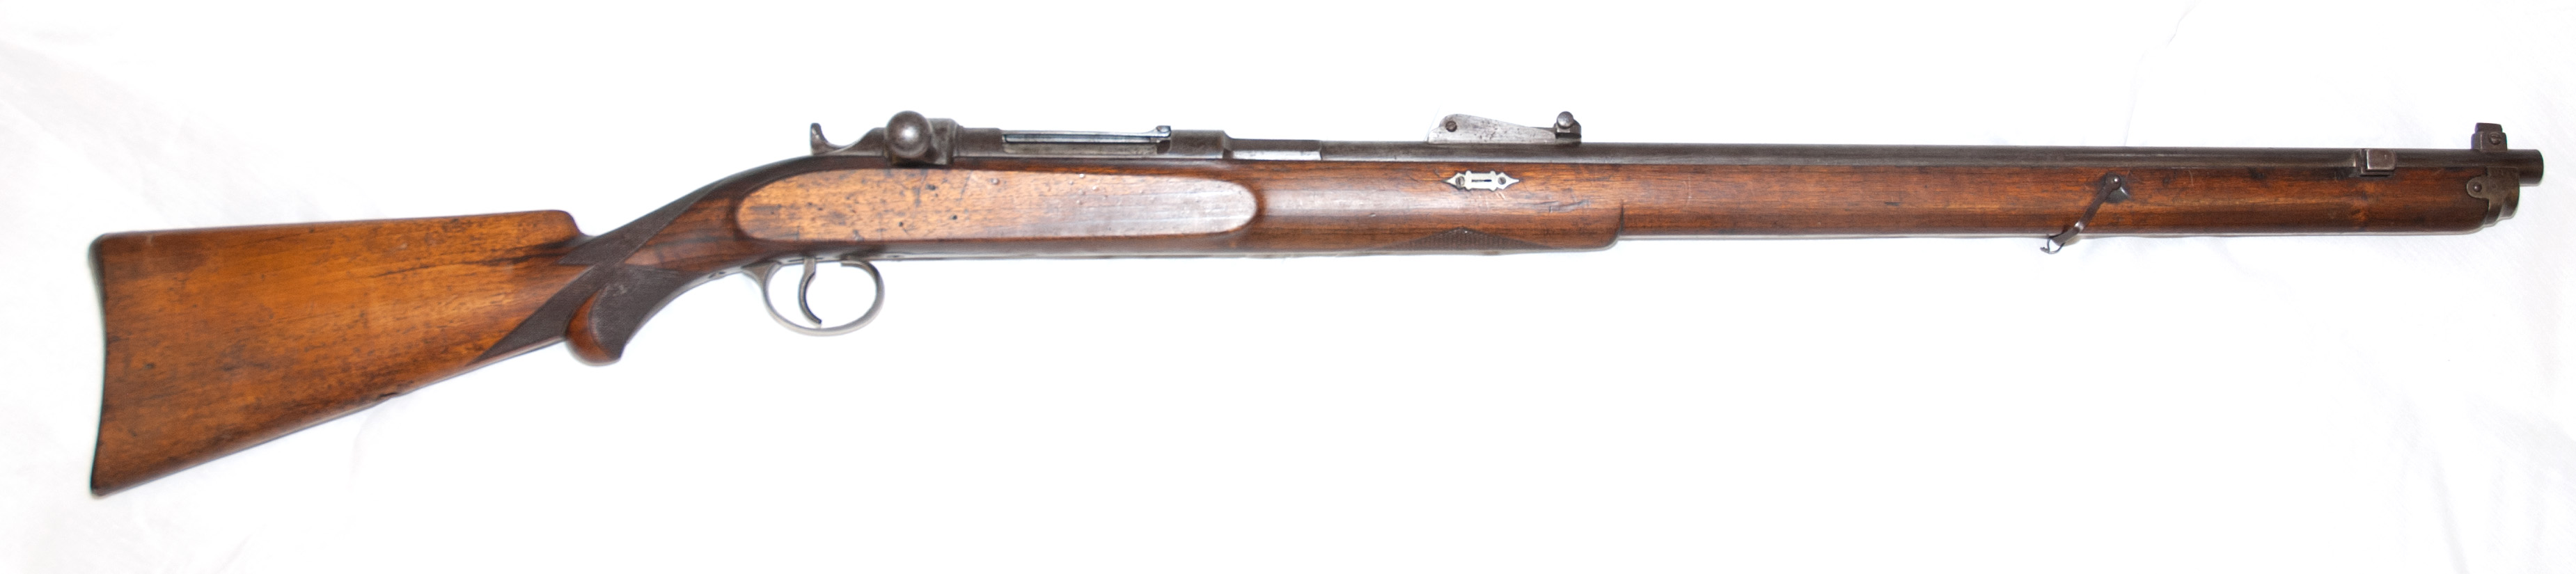 ./guns/rifle/bilder/Rifle-Kongsberg-Jarmann-M1884-Sivil-178-1.jpg